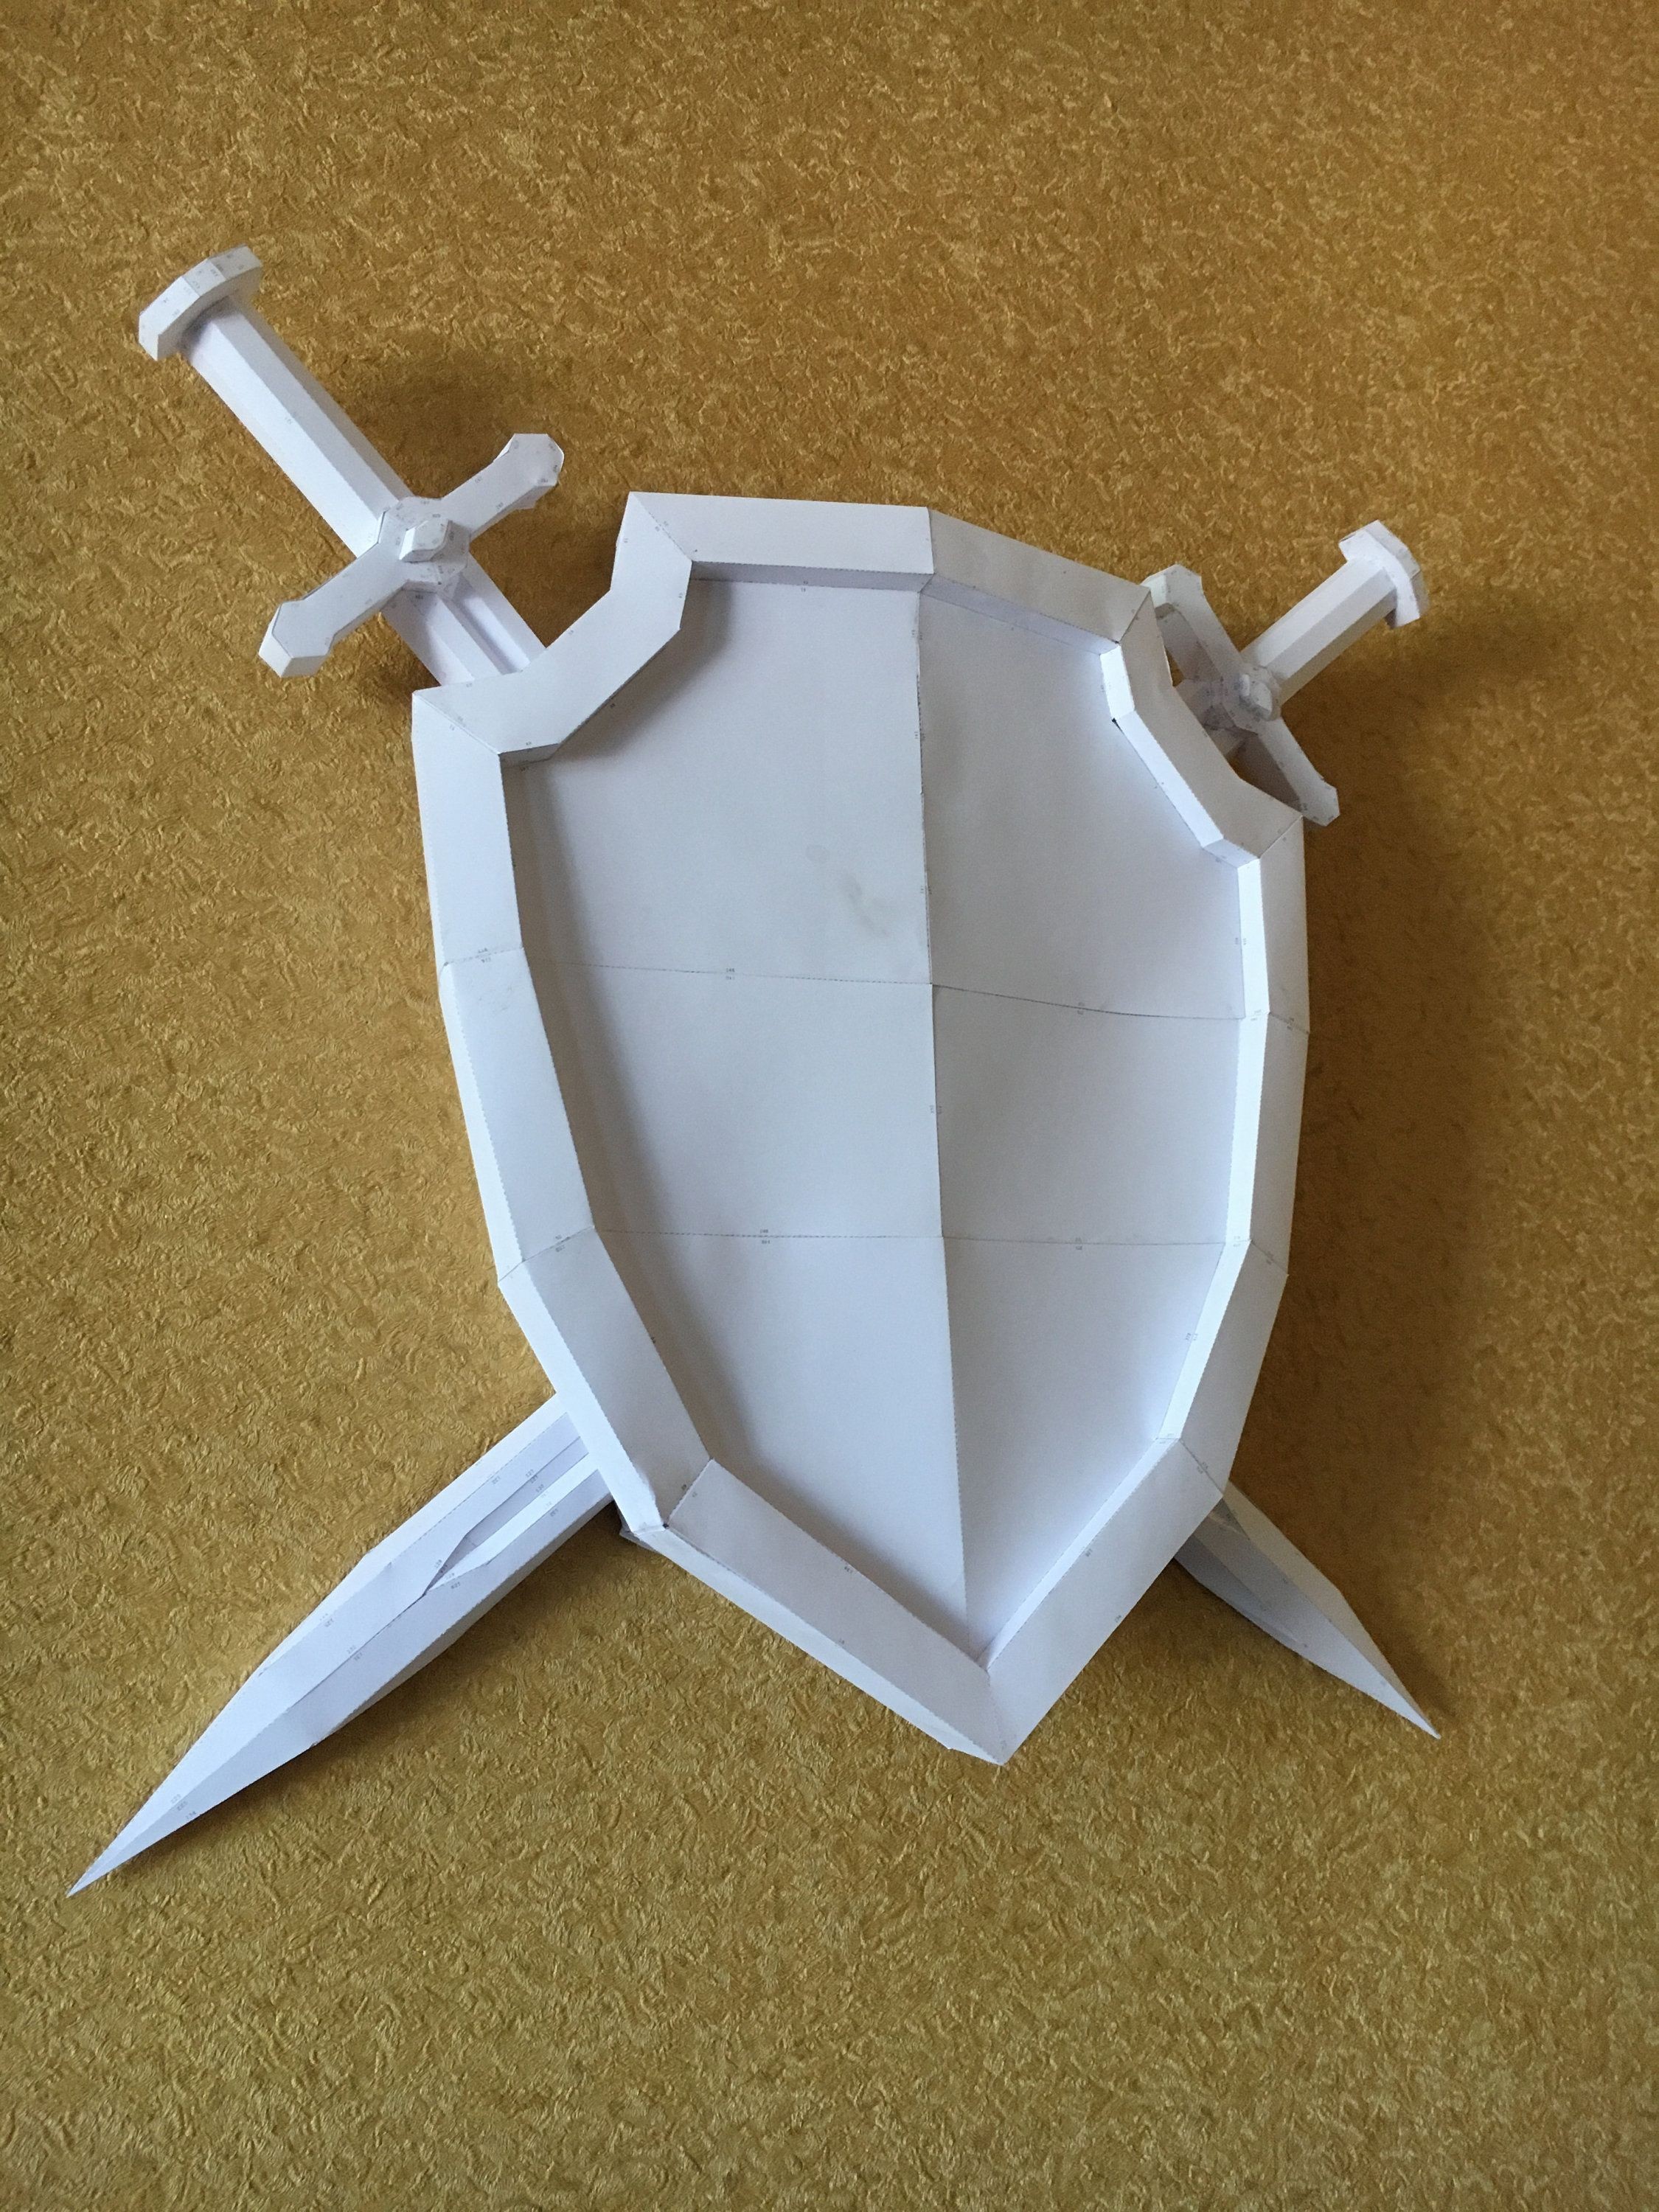 Papercraft Weapon Sword Shield Diy Papercraft Model ÐÑÐ¼Ð°Ð¶Ð½ÑÐµ Ð¸Ð·Ð´ÐµÐ Ð¸Ñ